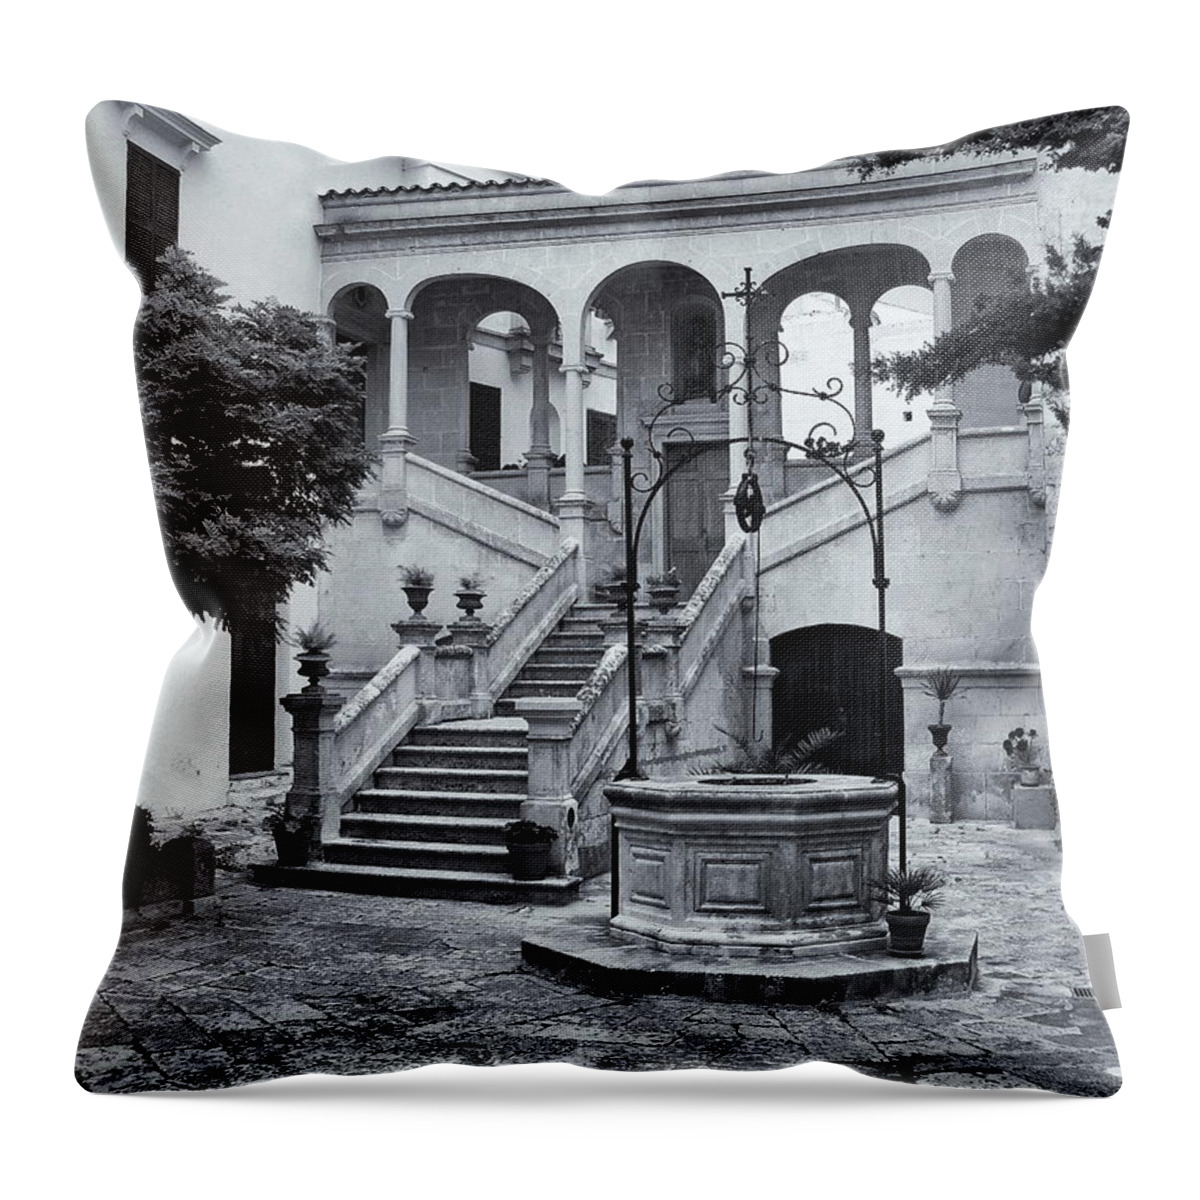 Garden Throw Pillow featuring the photograph Courtyard Garden Momochrome by Jeff Townsend